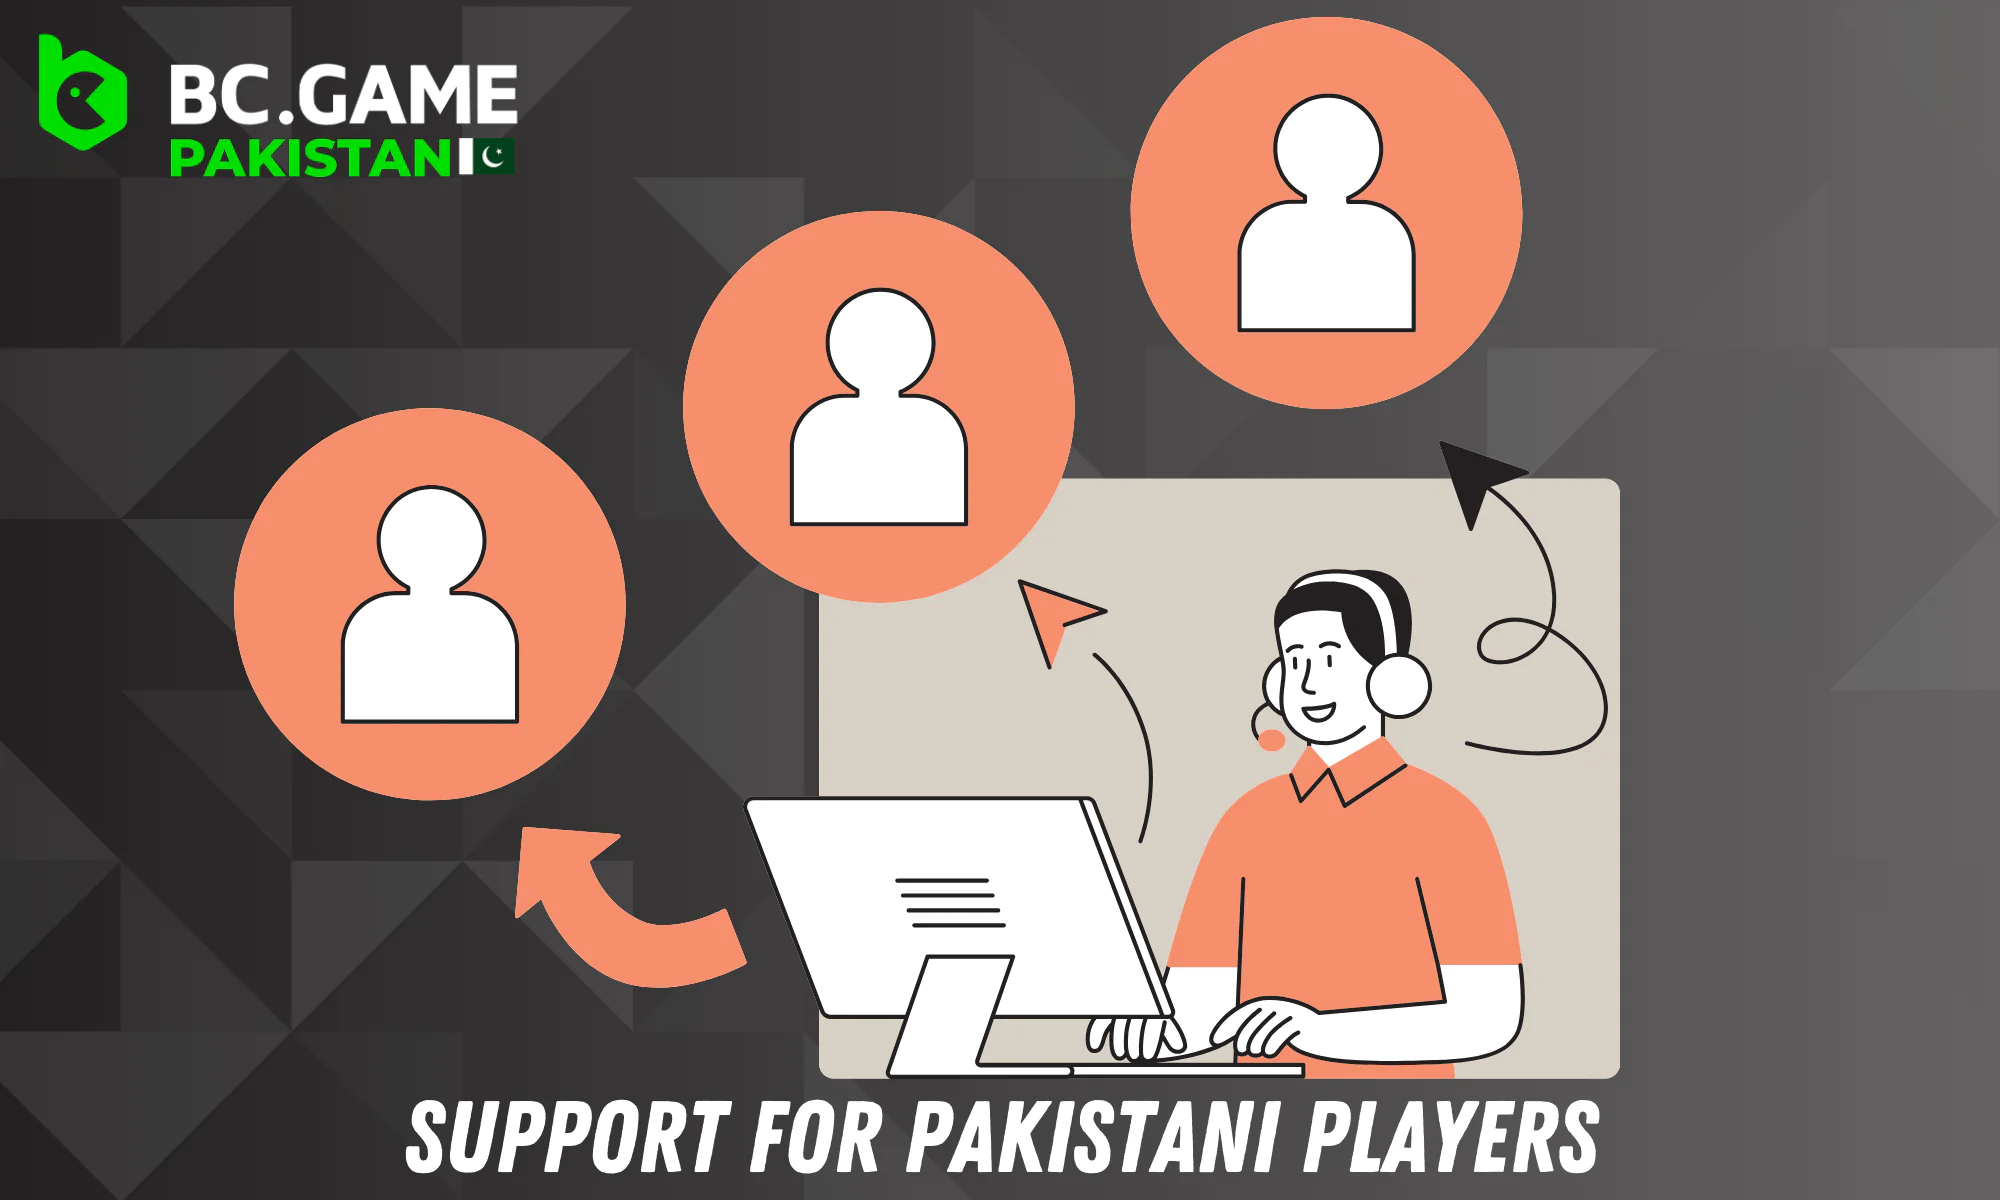 BC گیم پاکستان کے کھلاڑیوں کے لیے 24/7 جامع تعاون فراہم کرتا ہے۔